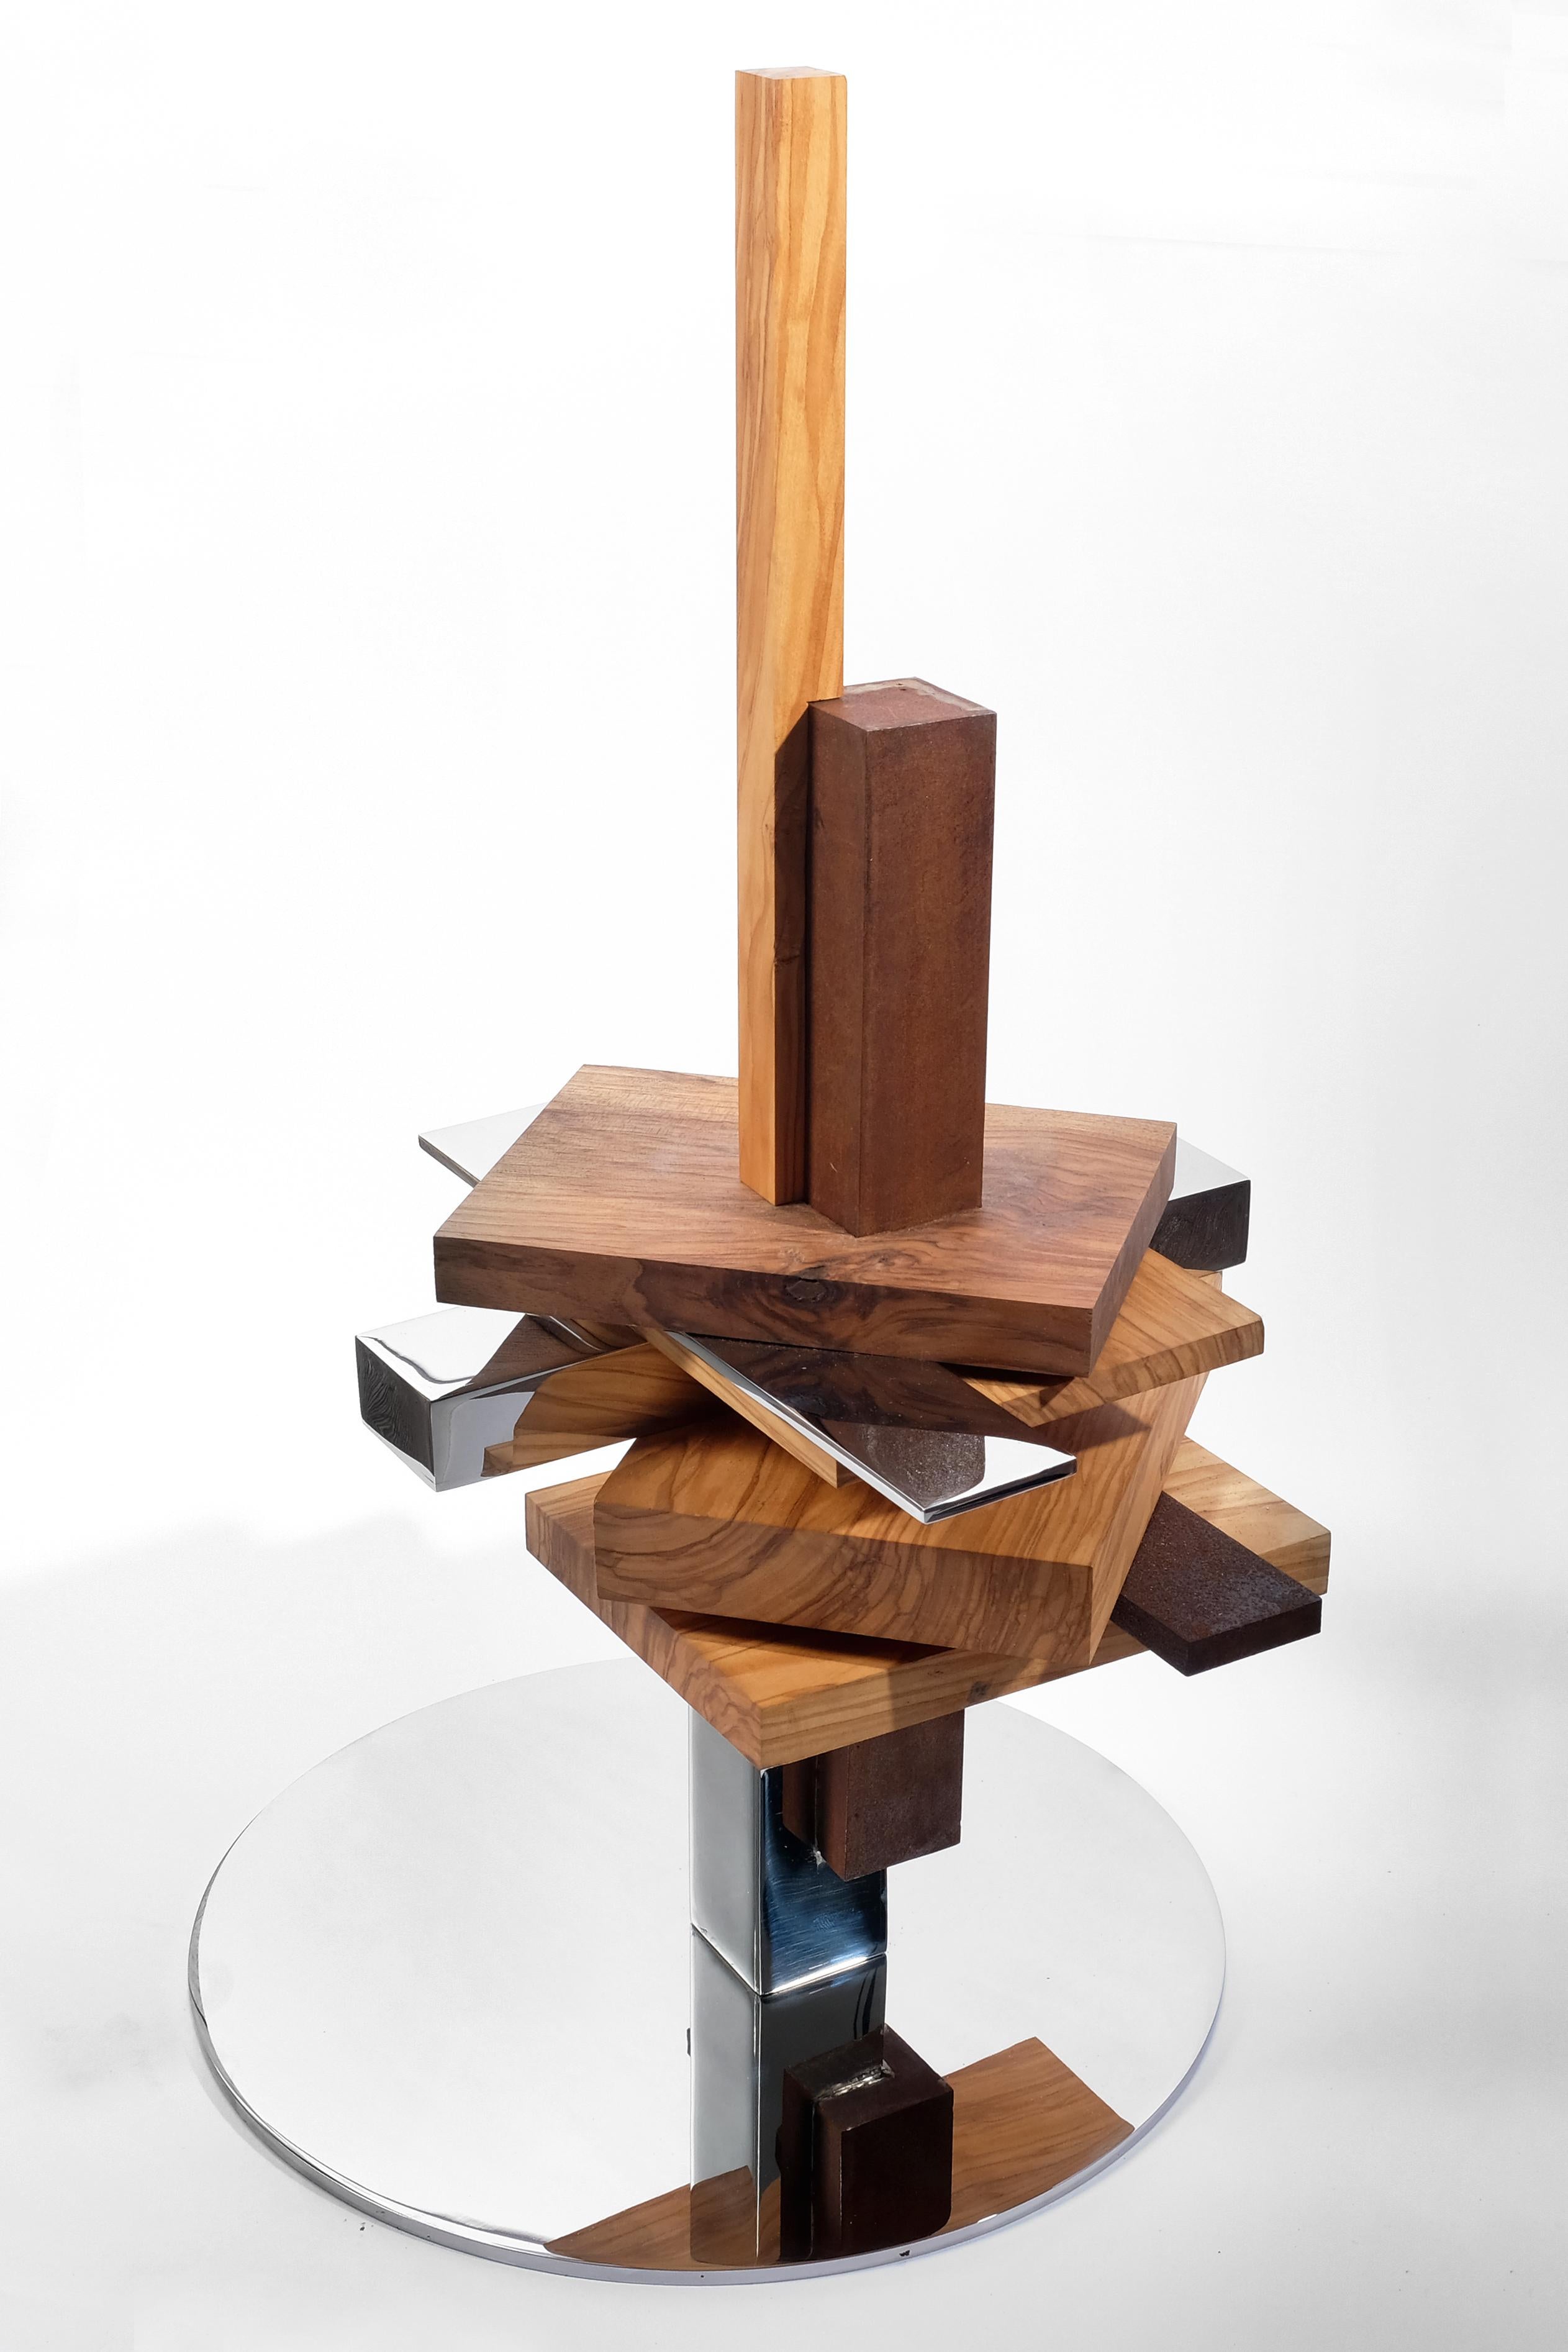 VR2018_SC05 - Sculpture by Daniele Basso